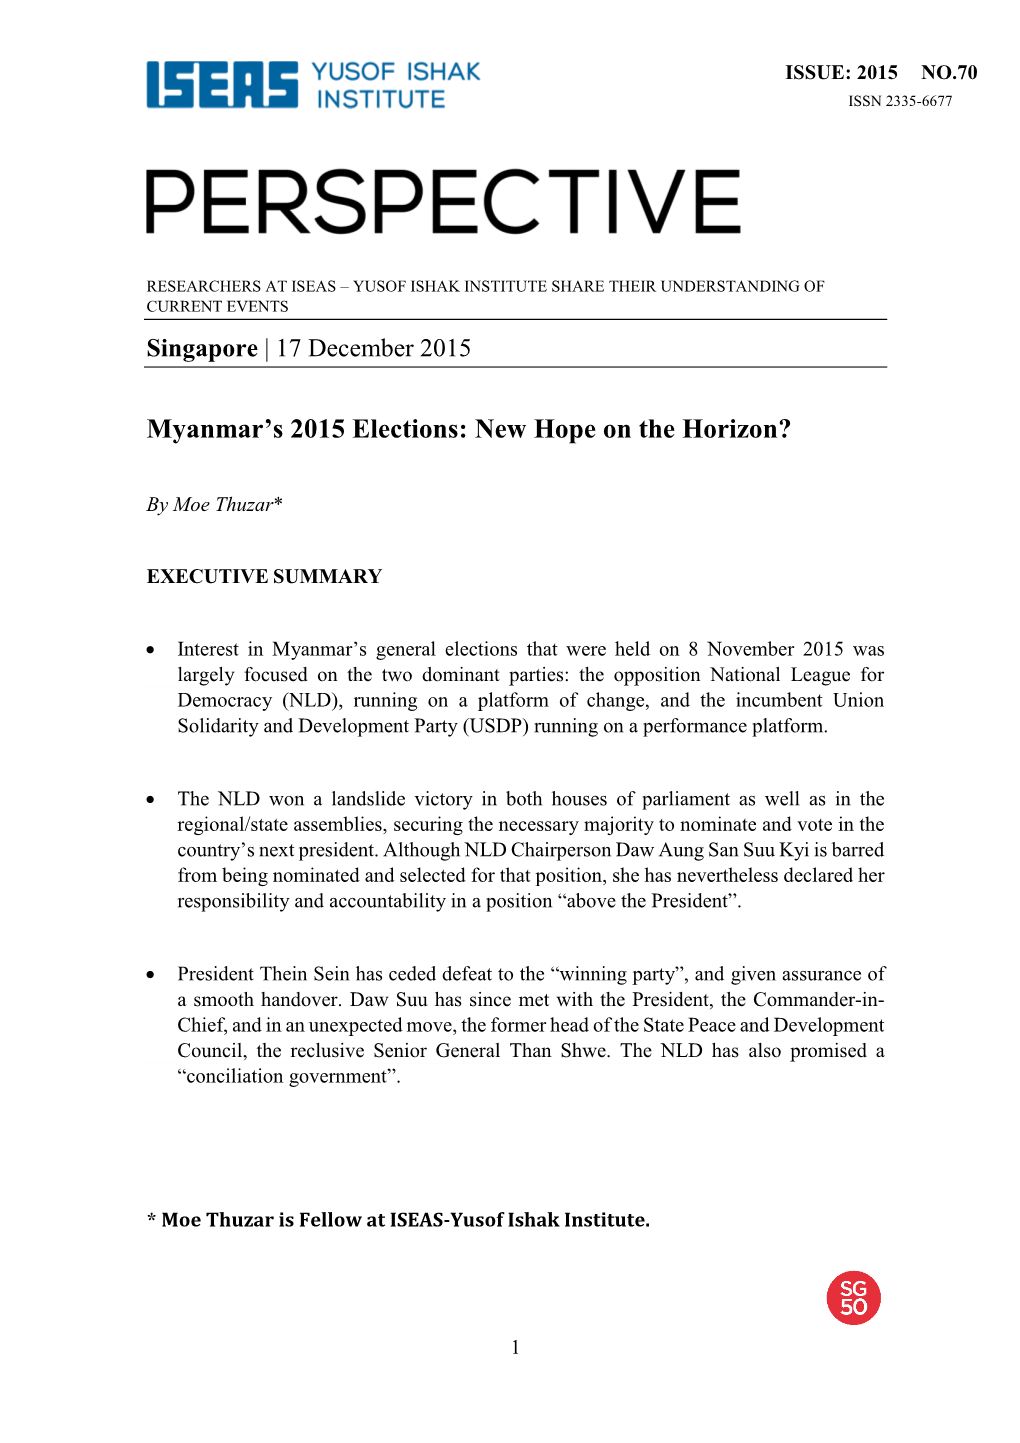 Myanmar's 2015 Elections